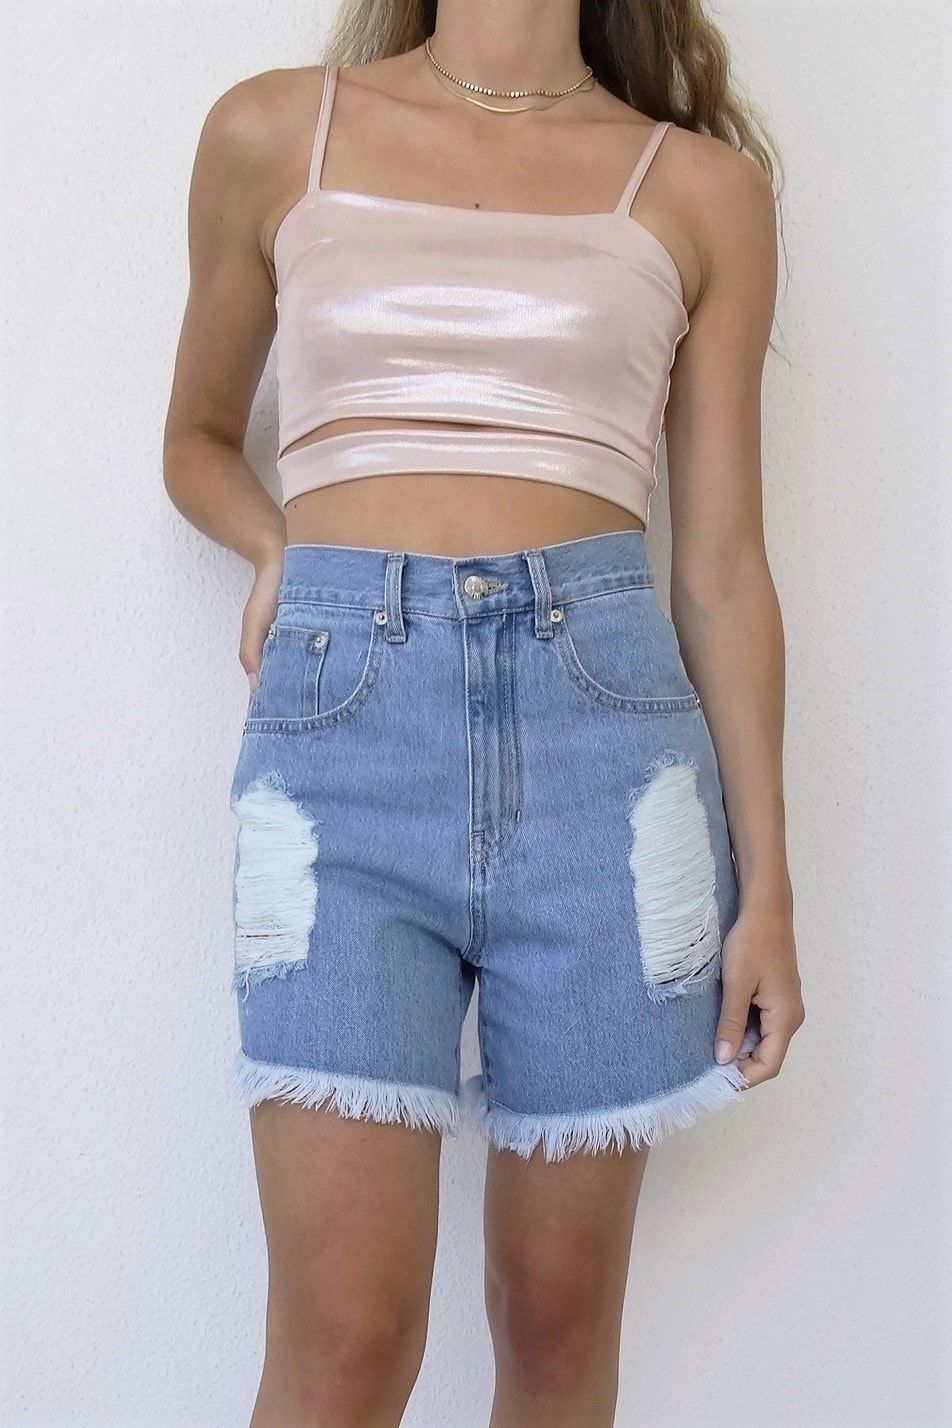 Selena medium light blue long jean shorts